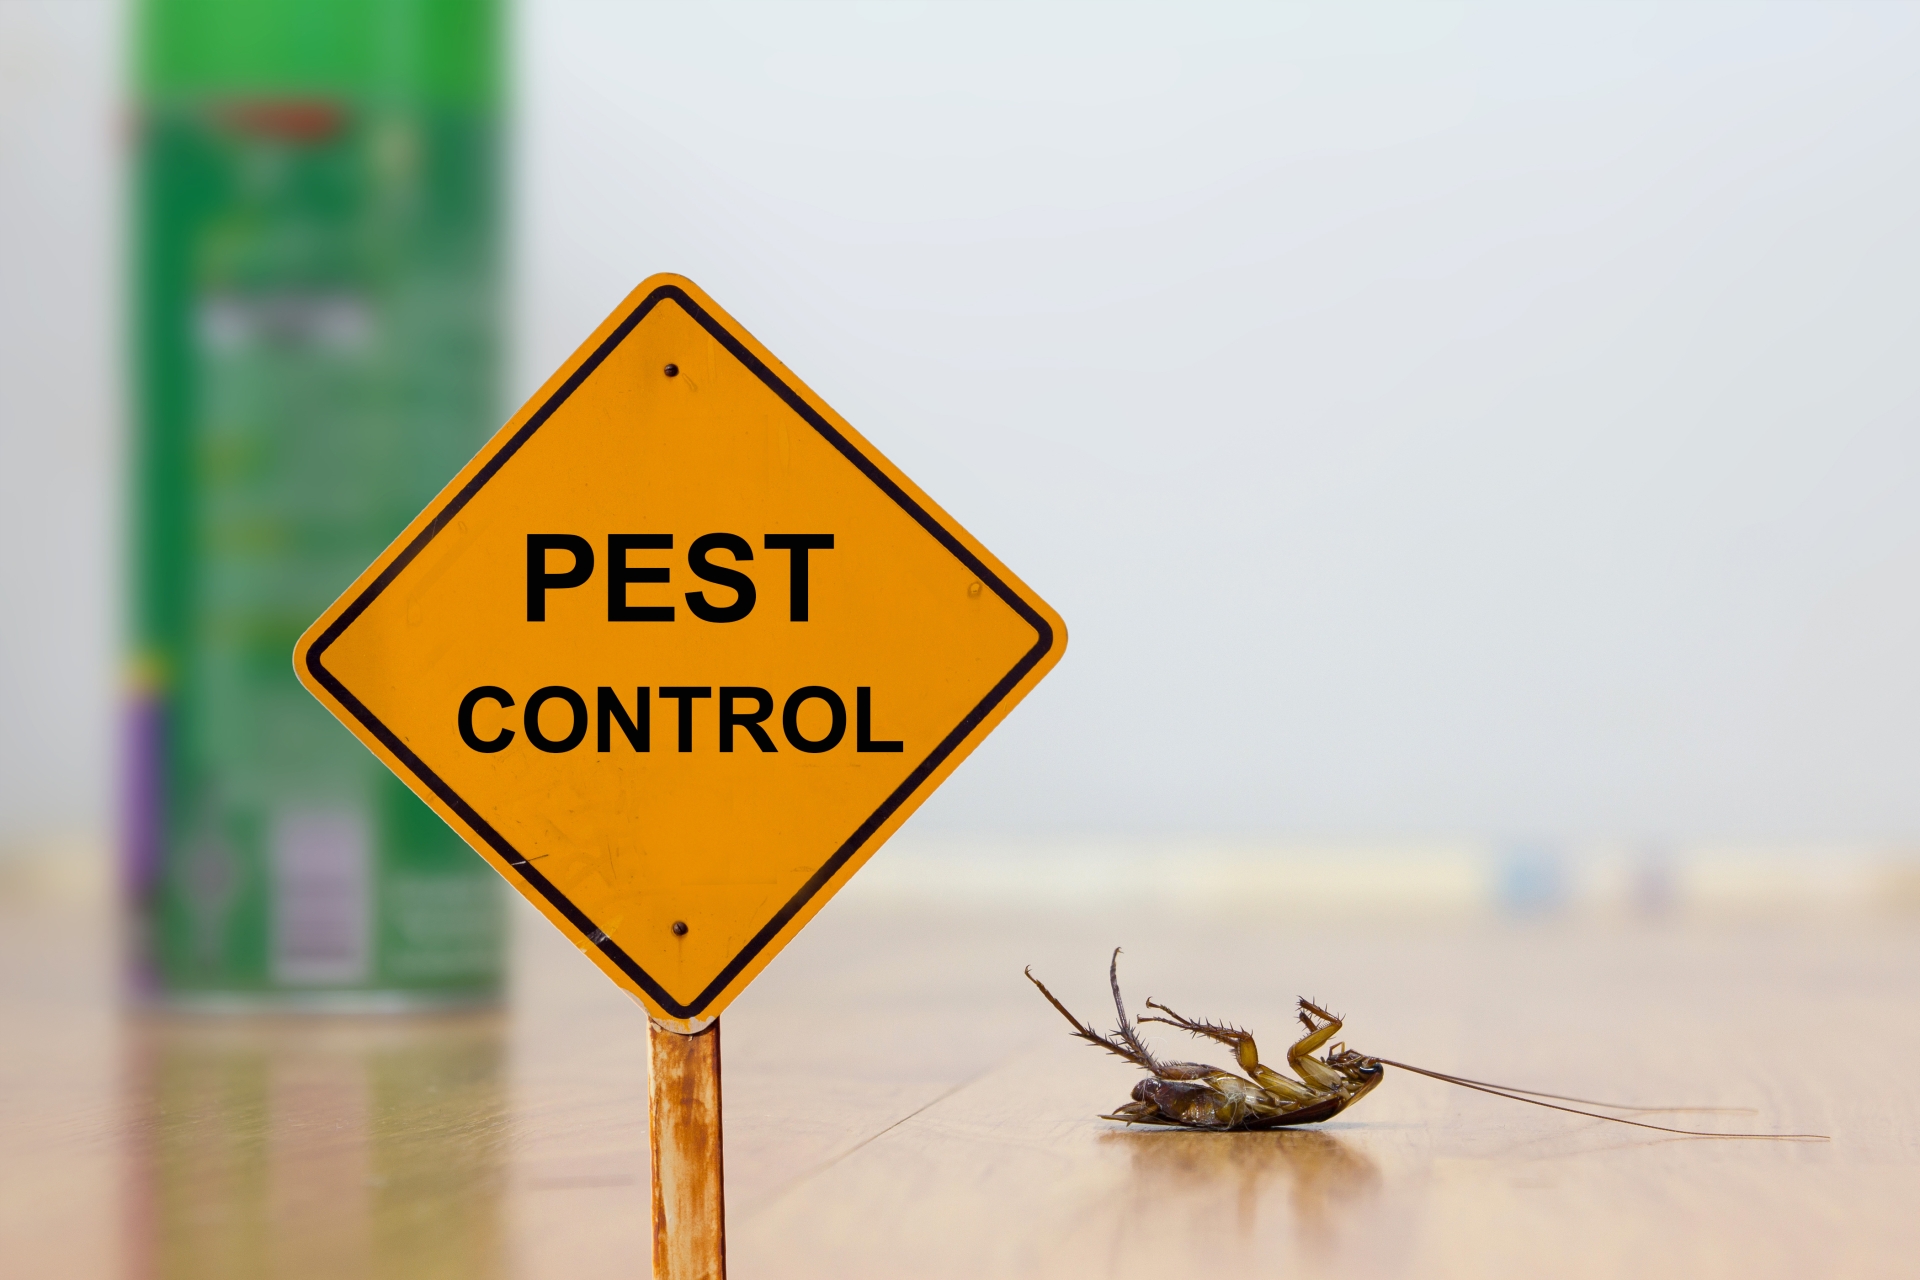 24 Hour Pest Control, Pest Control in Edgware, Burnt Oak, HA8. Call Now 020 8166 9746